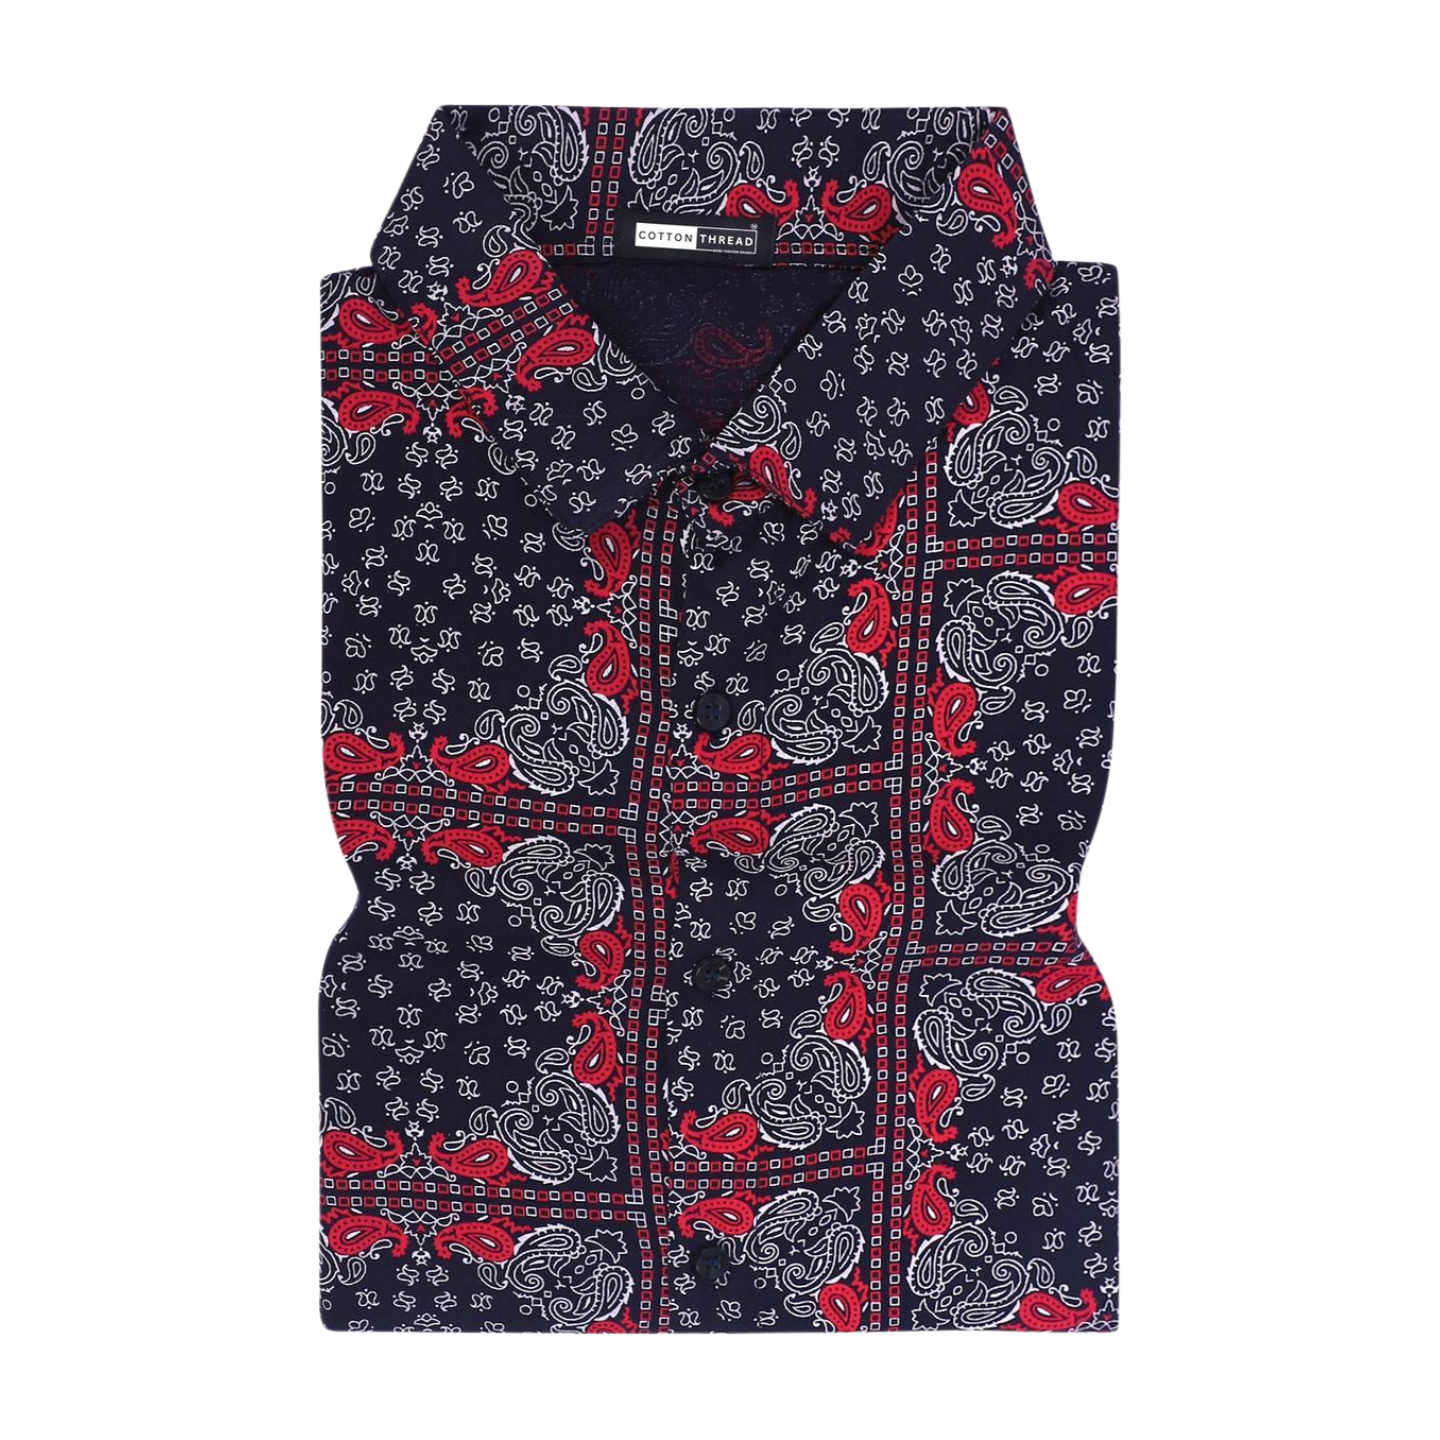 Men's Premium Cotton Half Sleeve Black Red Bandana Printed Shirt By Cotton Thread (PRT-095)